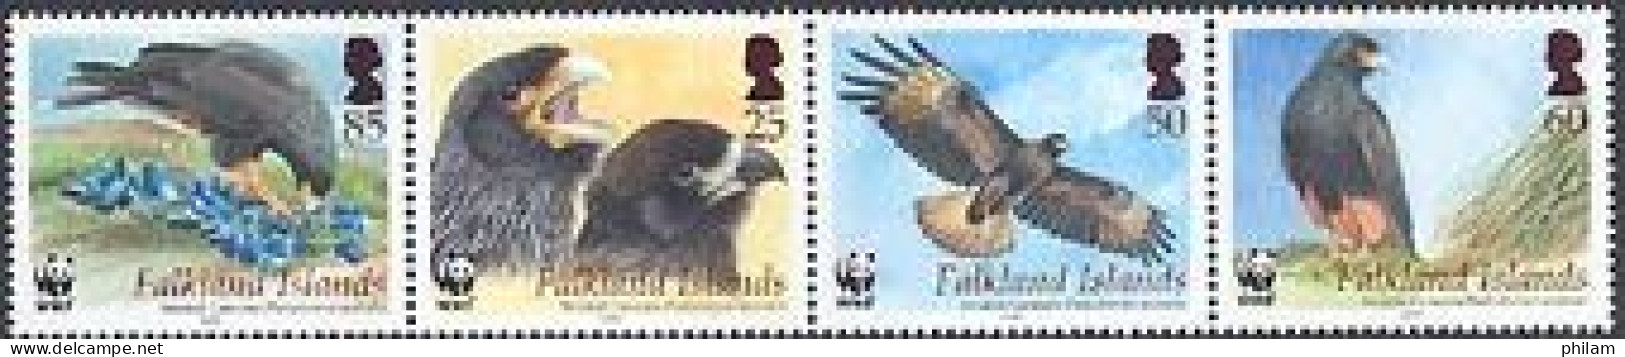 FALKLAND 2006 - W.W.F. - Faucon Austral - Falcoboenus Australis - 4 V. - Falklandinseln